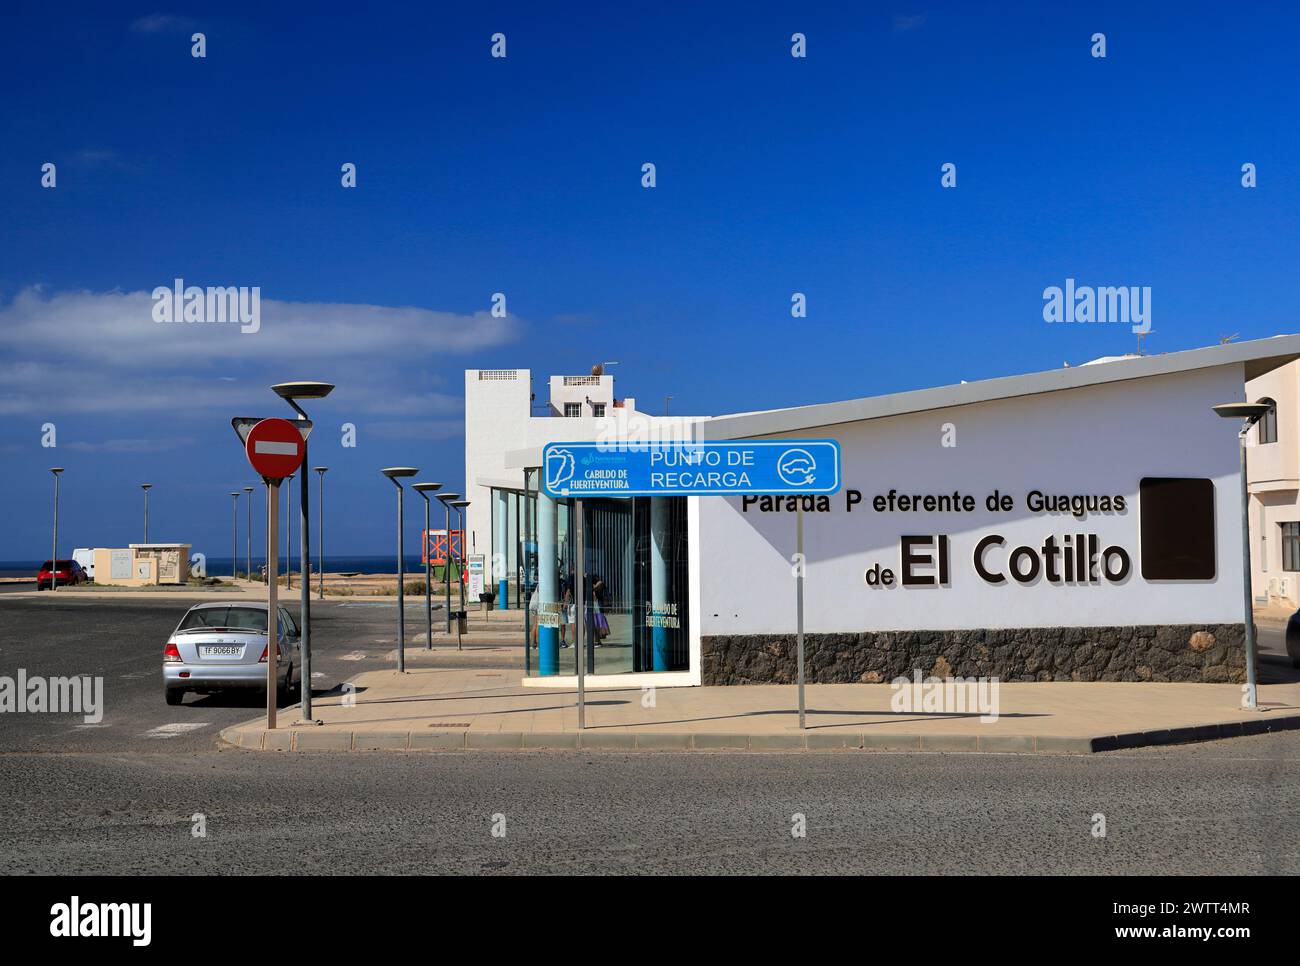 Bushaltestelle oder Estacion Guaguas, El Cotillo, Fuerteventura, Kanarische Inseln, Spanien. Stockfoto